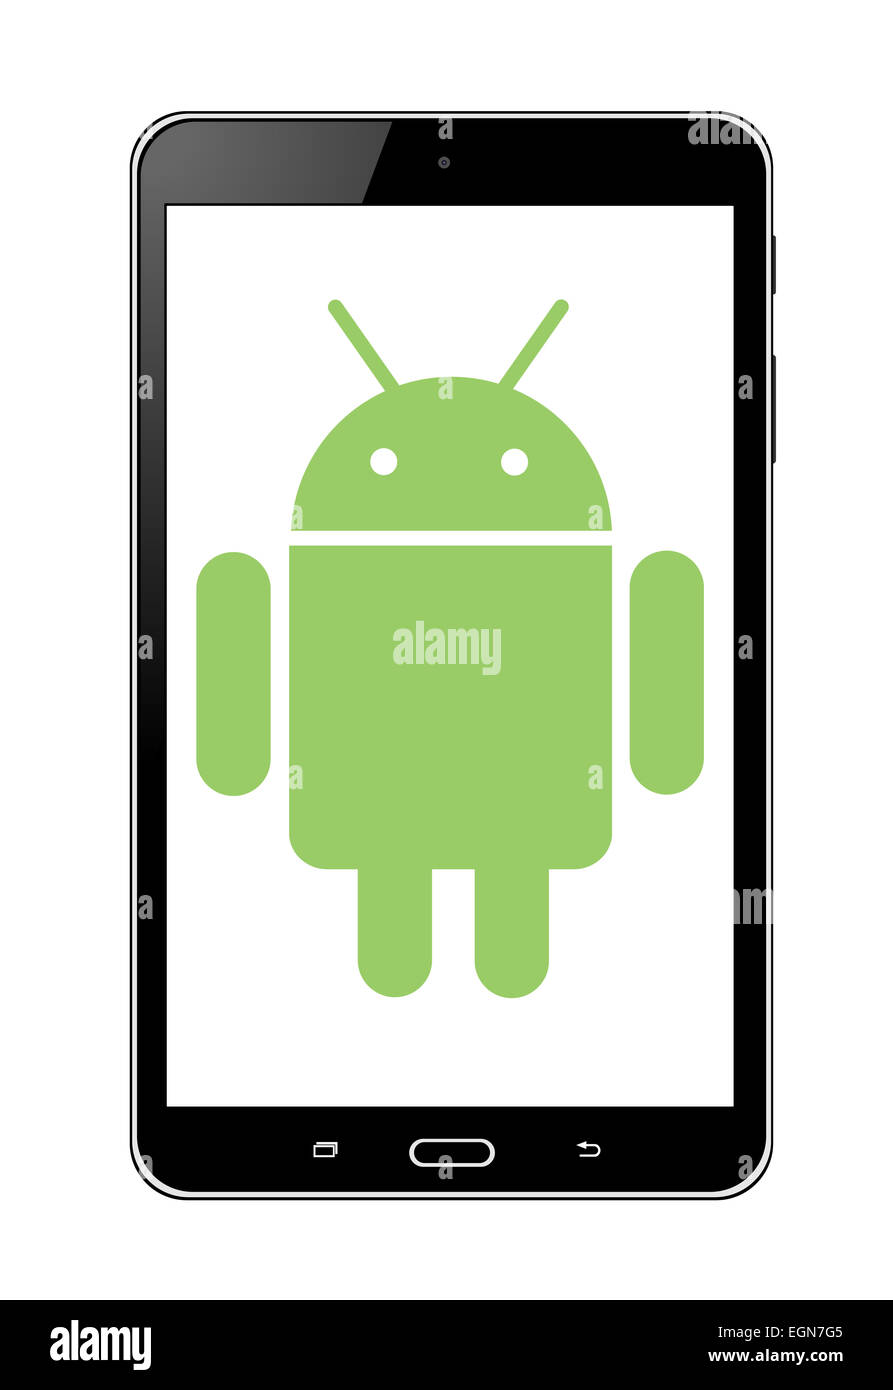 Android Sistema operationg Foto Stock